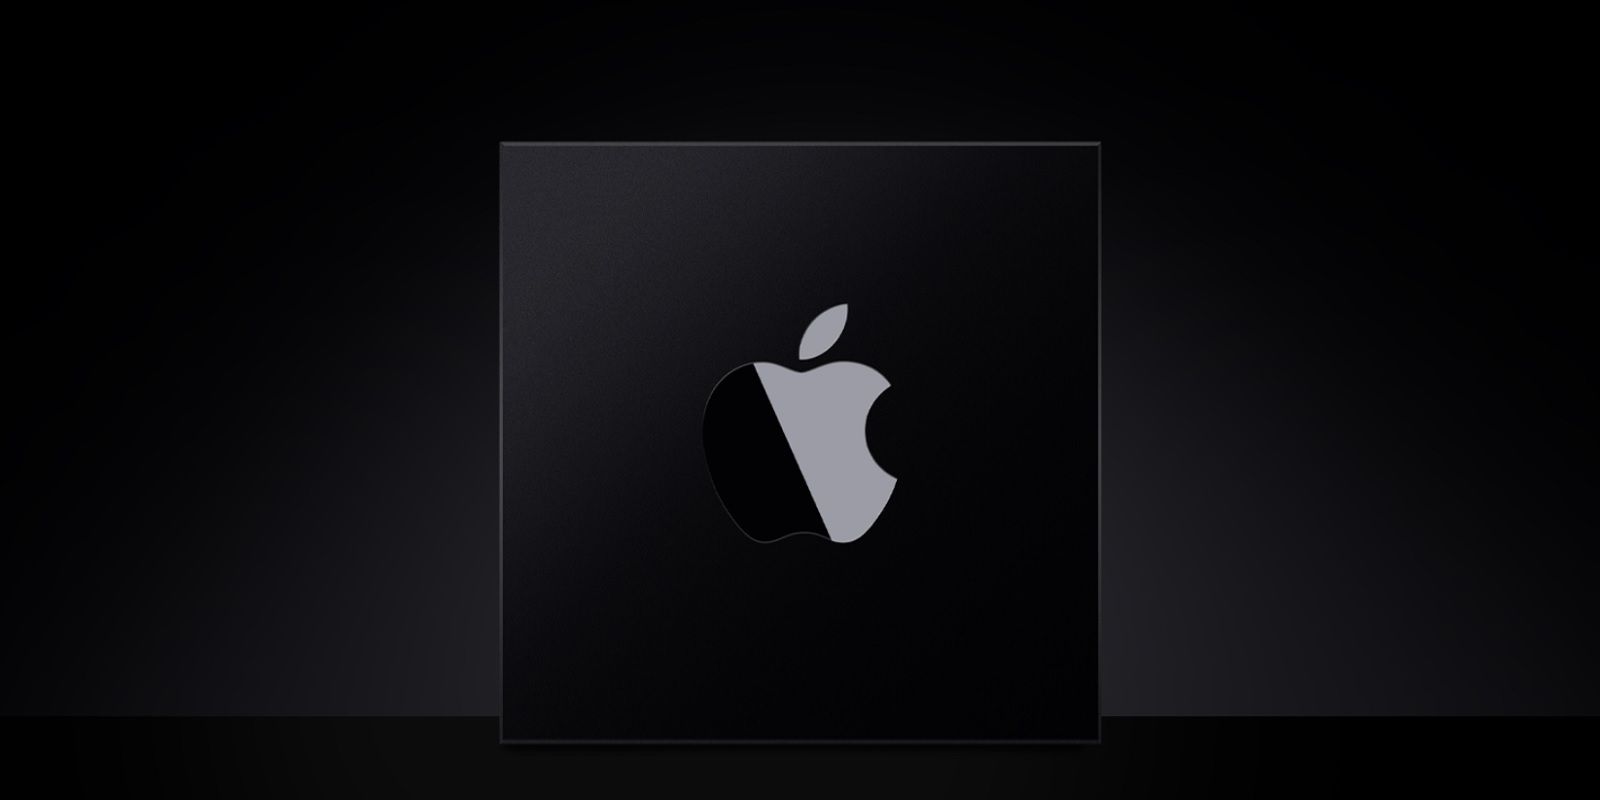 Apple Silicon black box on a black background.